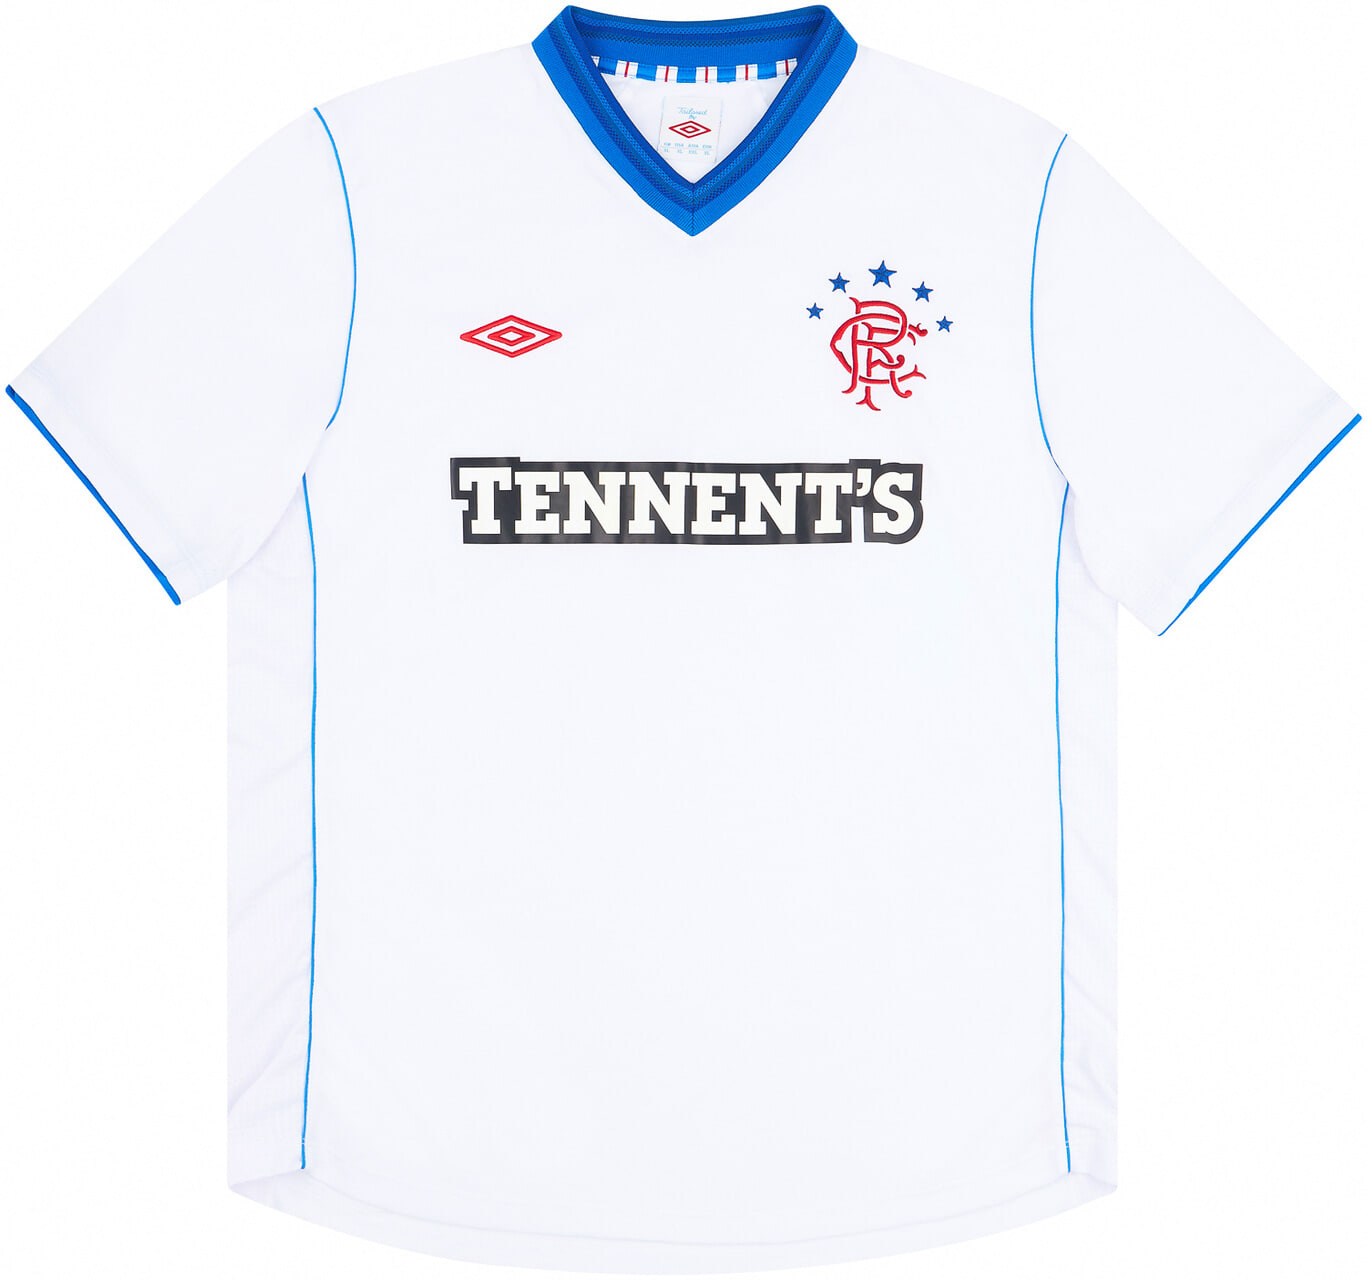 Rangers  Uit  shirt  (Original)